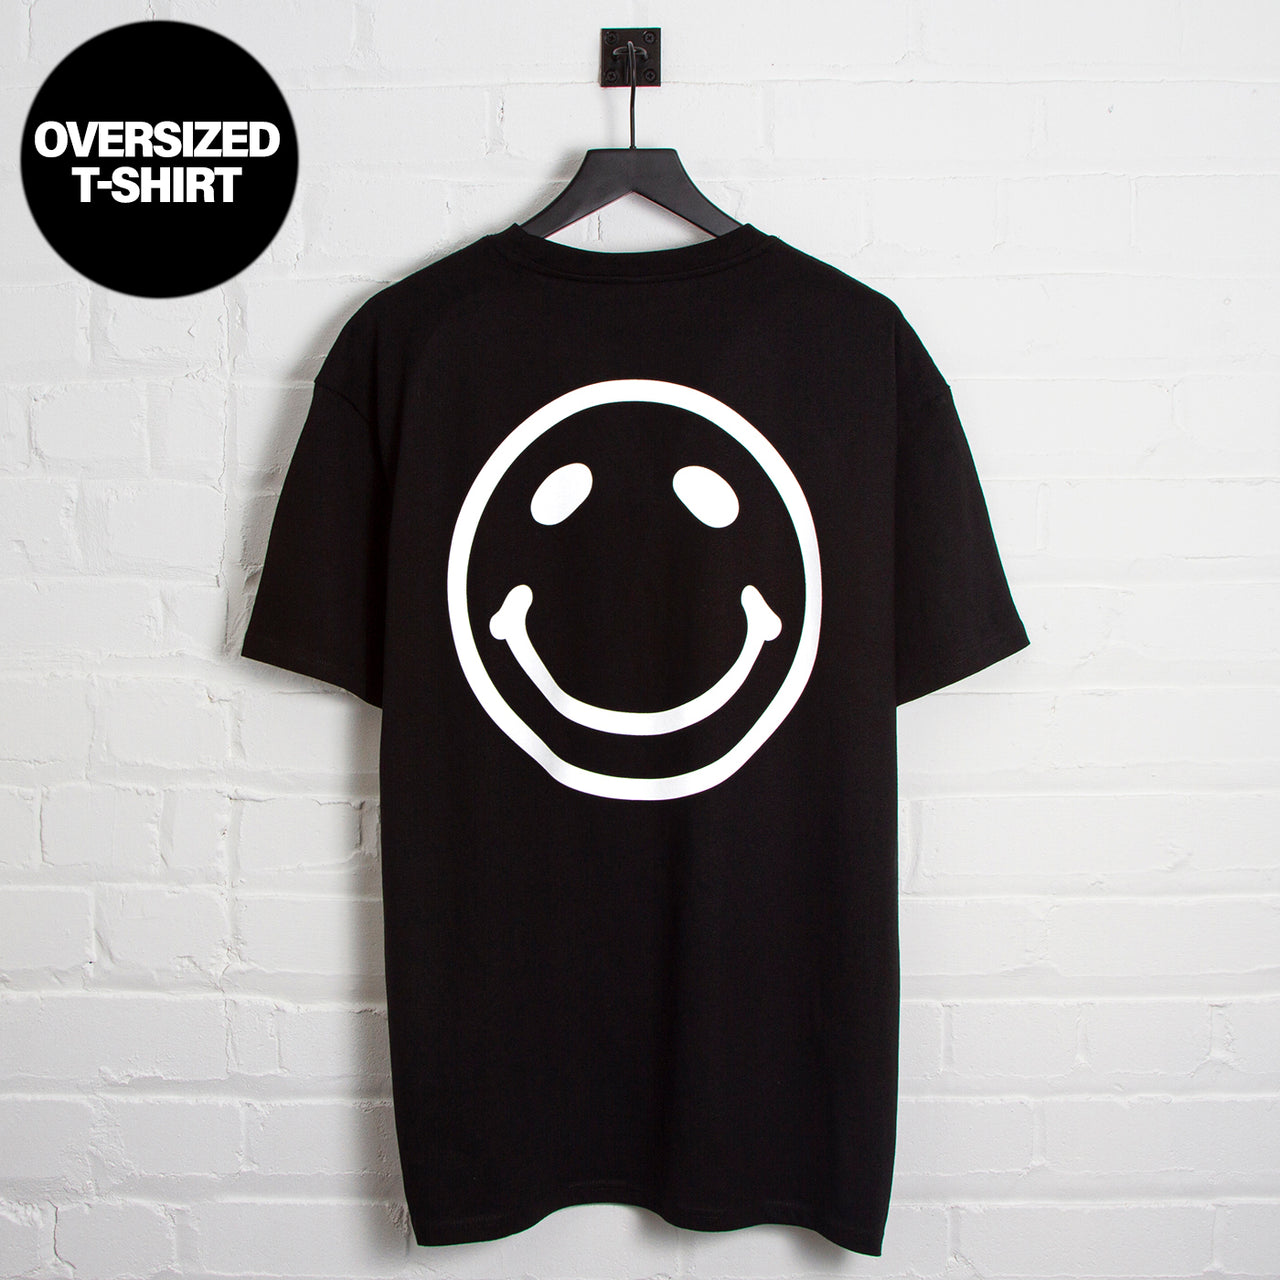 V2 Acid Party Shock  - Oversized Tshirt - Black